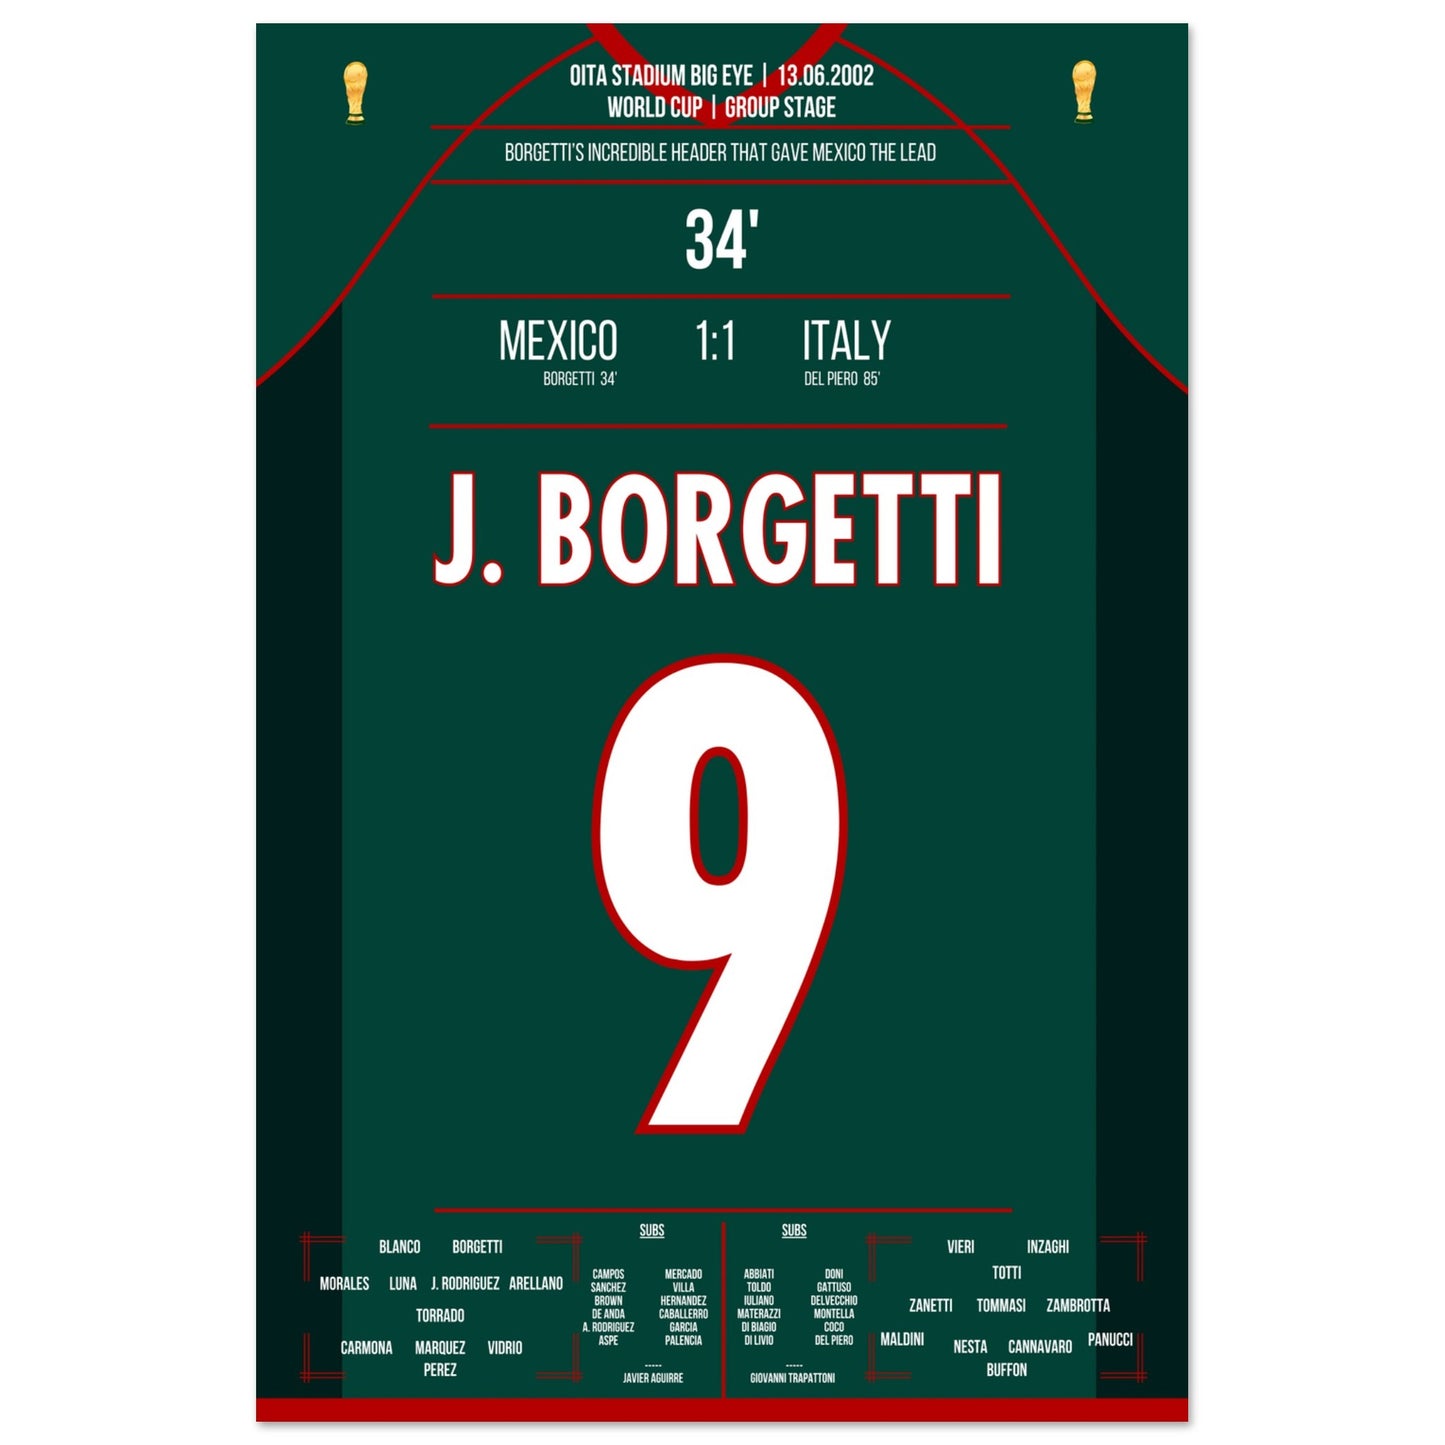 Borgetti's sensationelles Kopfballtor gegen Buffon bei der WM 2002